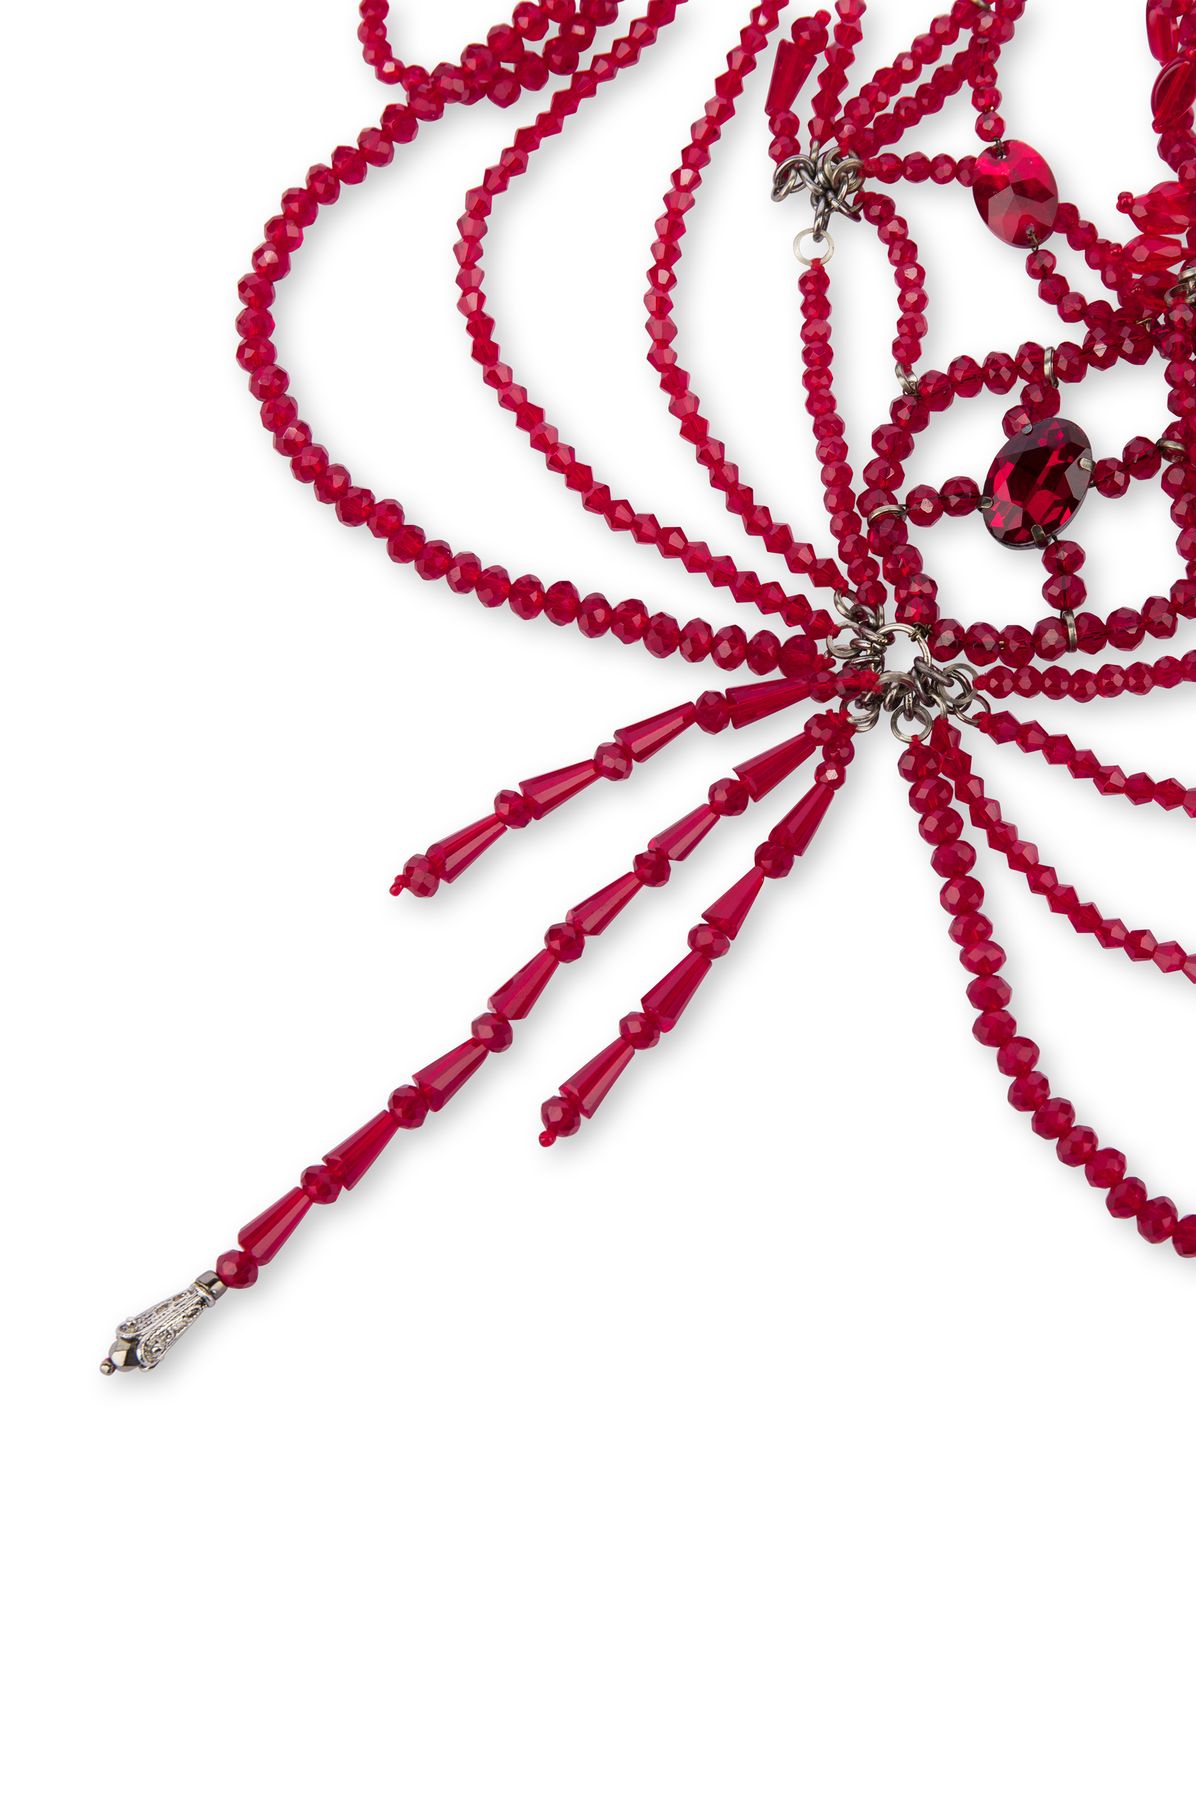 Alberta Ferretti Maxi necklace with red beads